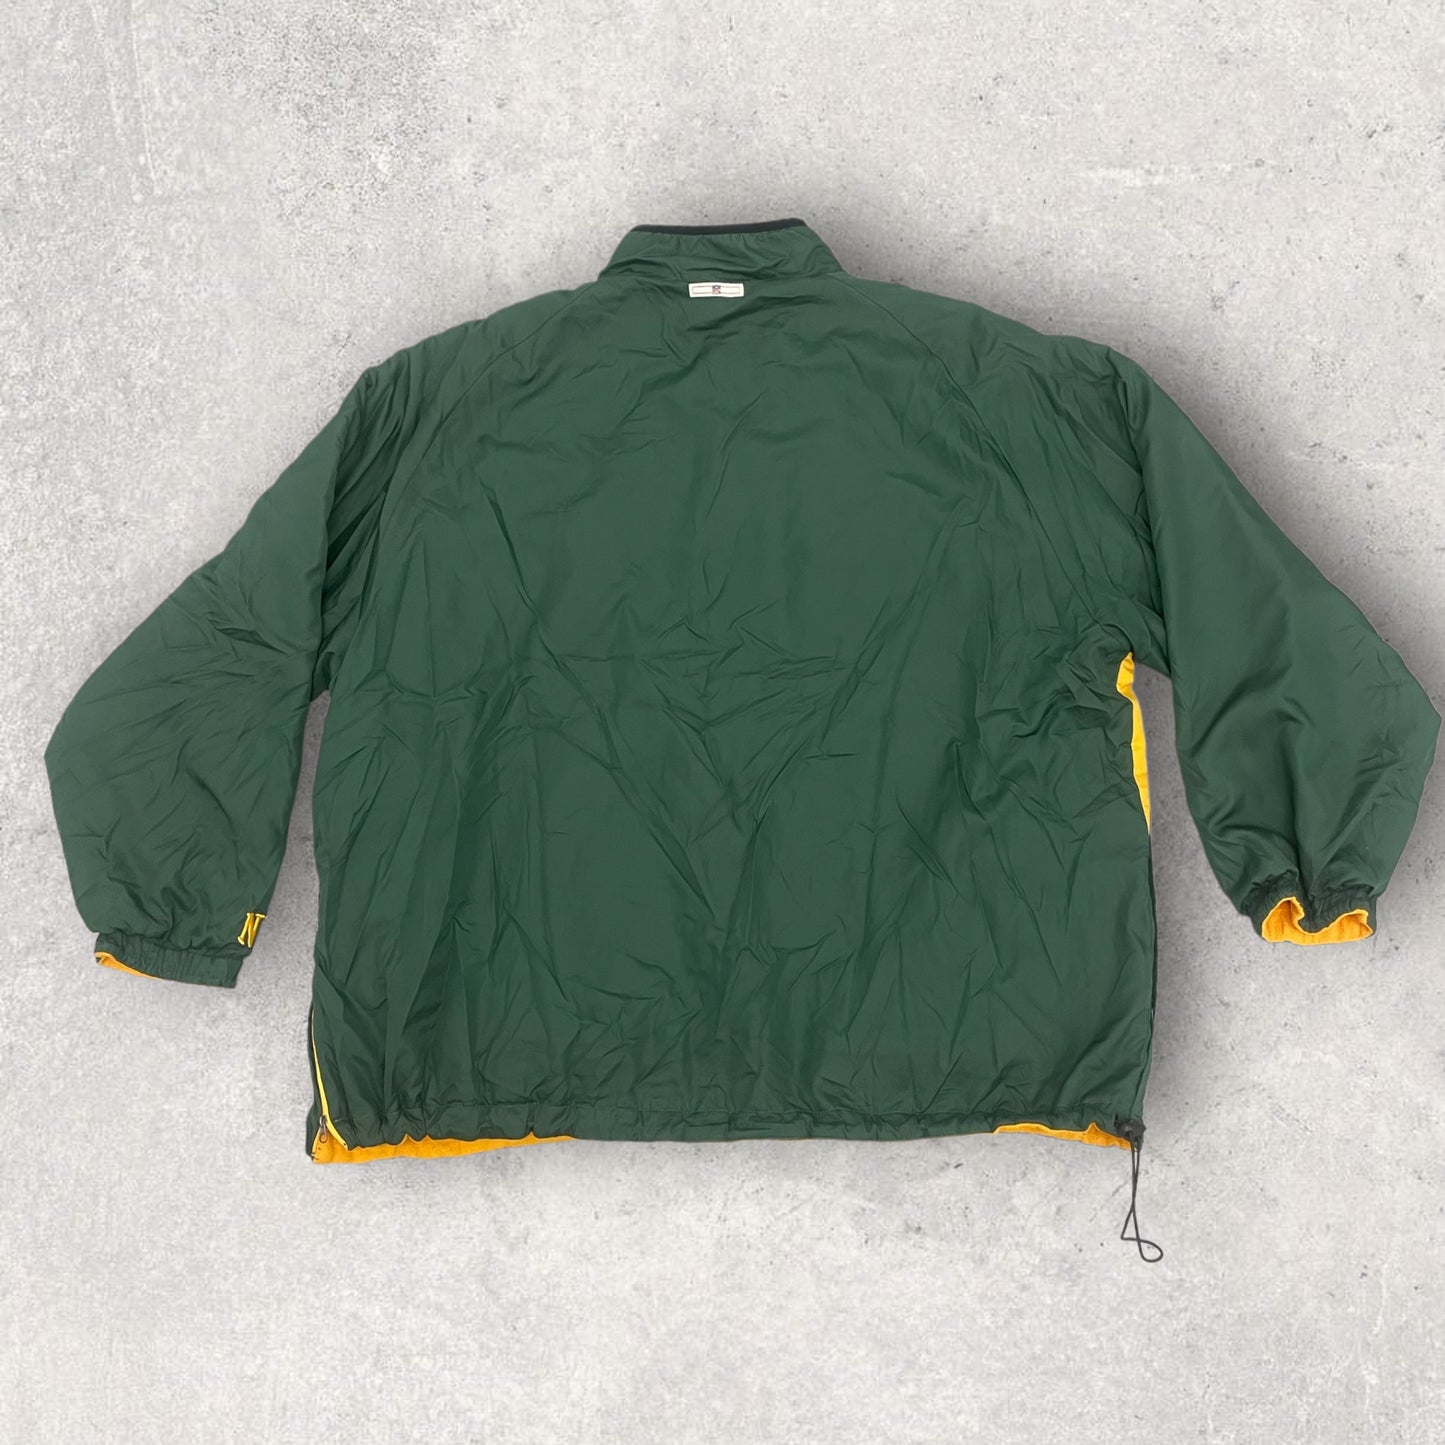 Vintage NFL Fleece Jacket Green Packers Reversible Size XXL Fl_17